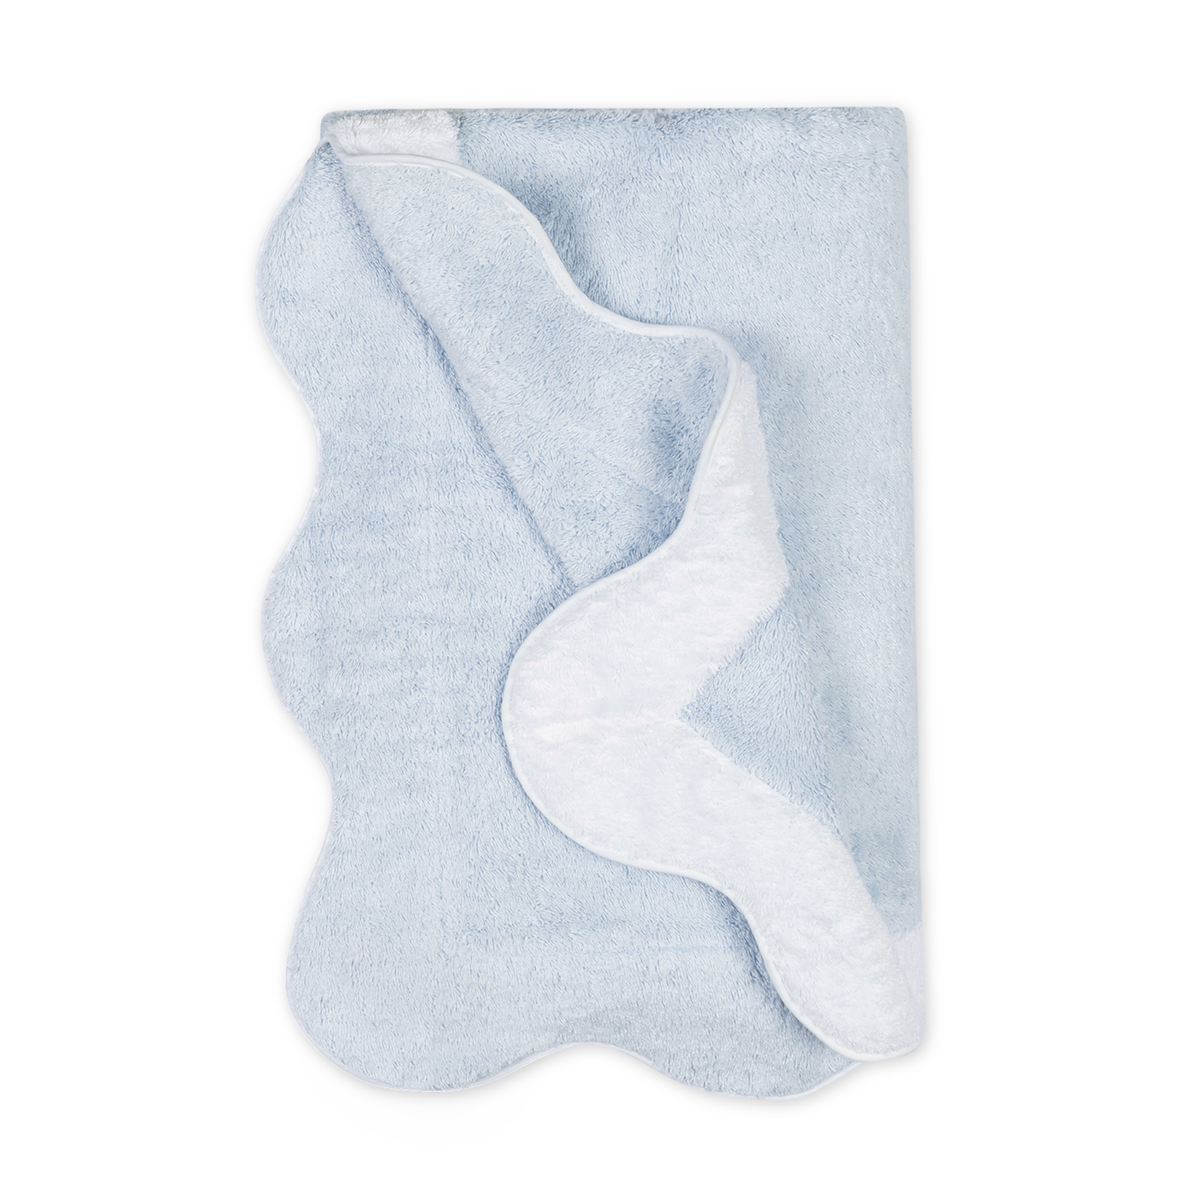 Folded Matouk Neptune Beach Towels in Light Blue/White Color